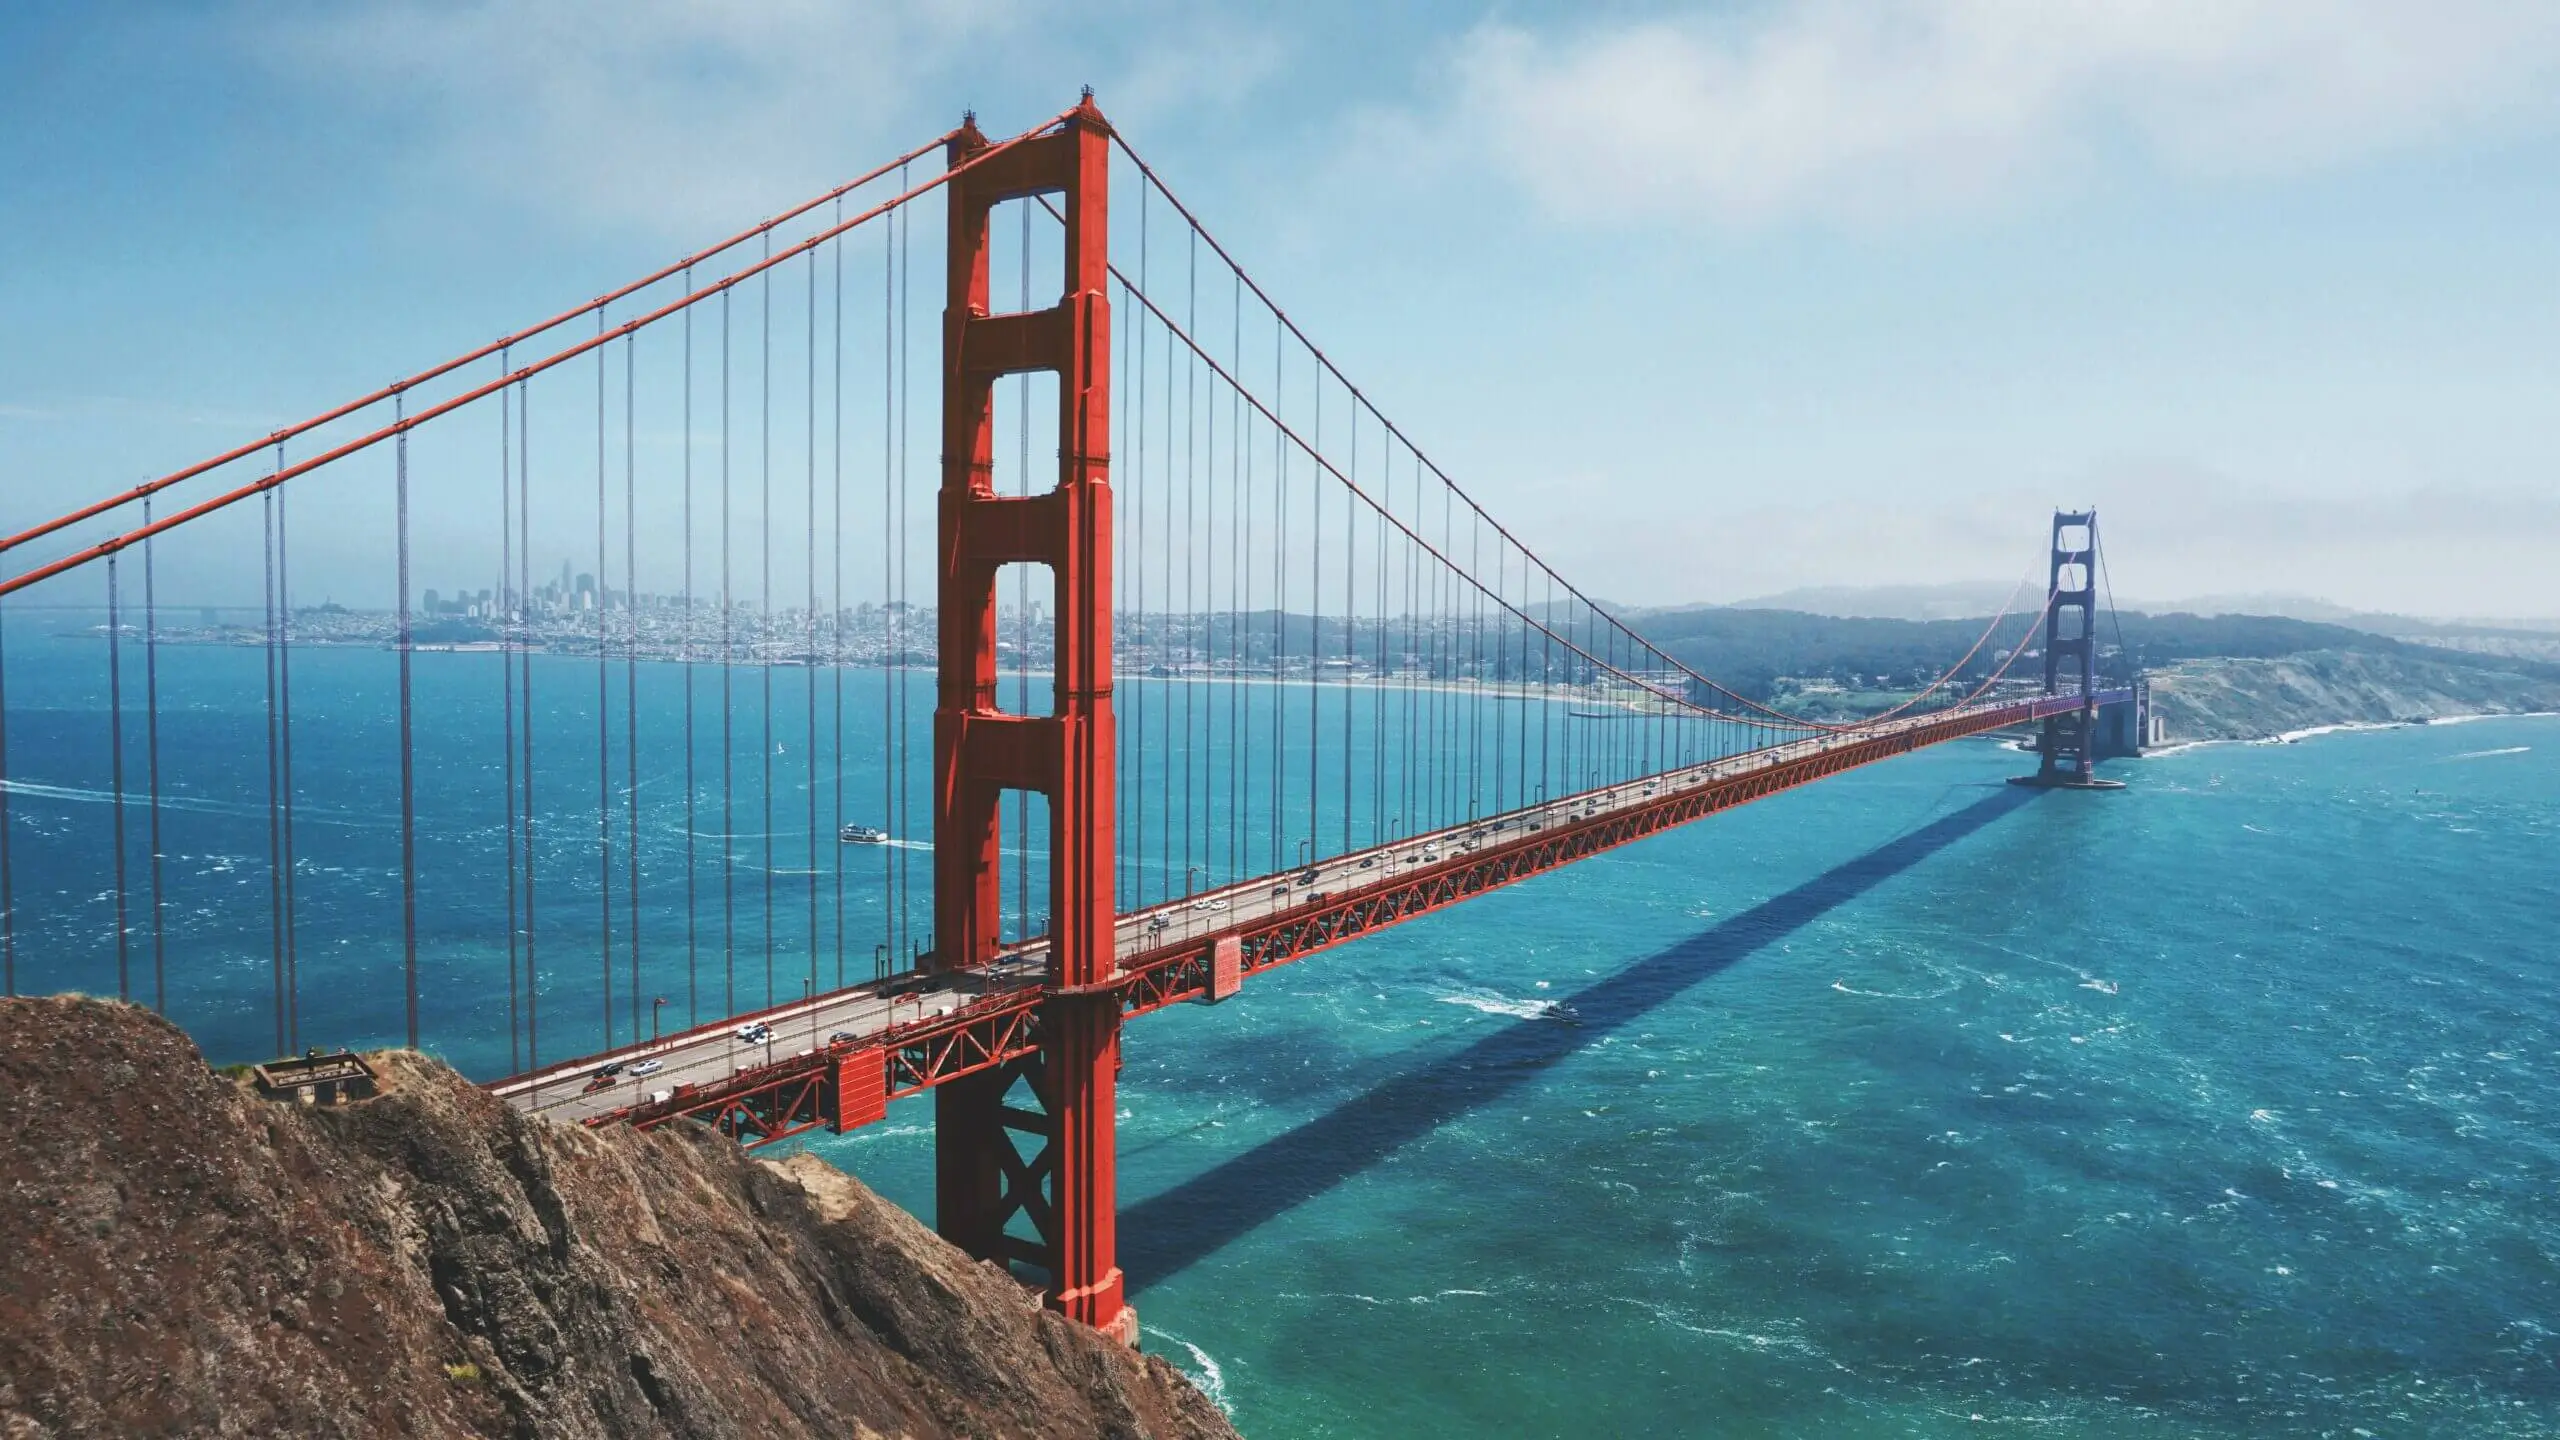 The Allure of the Golden Gate Bridge